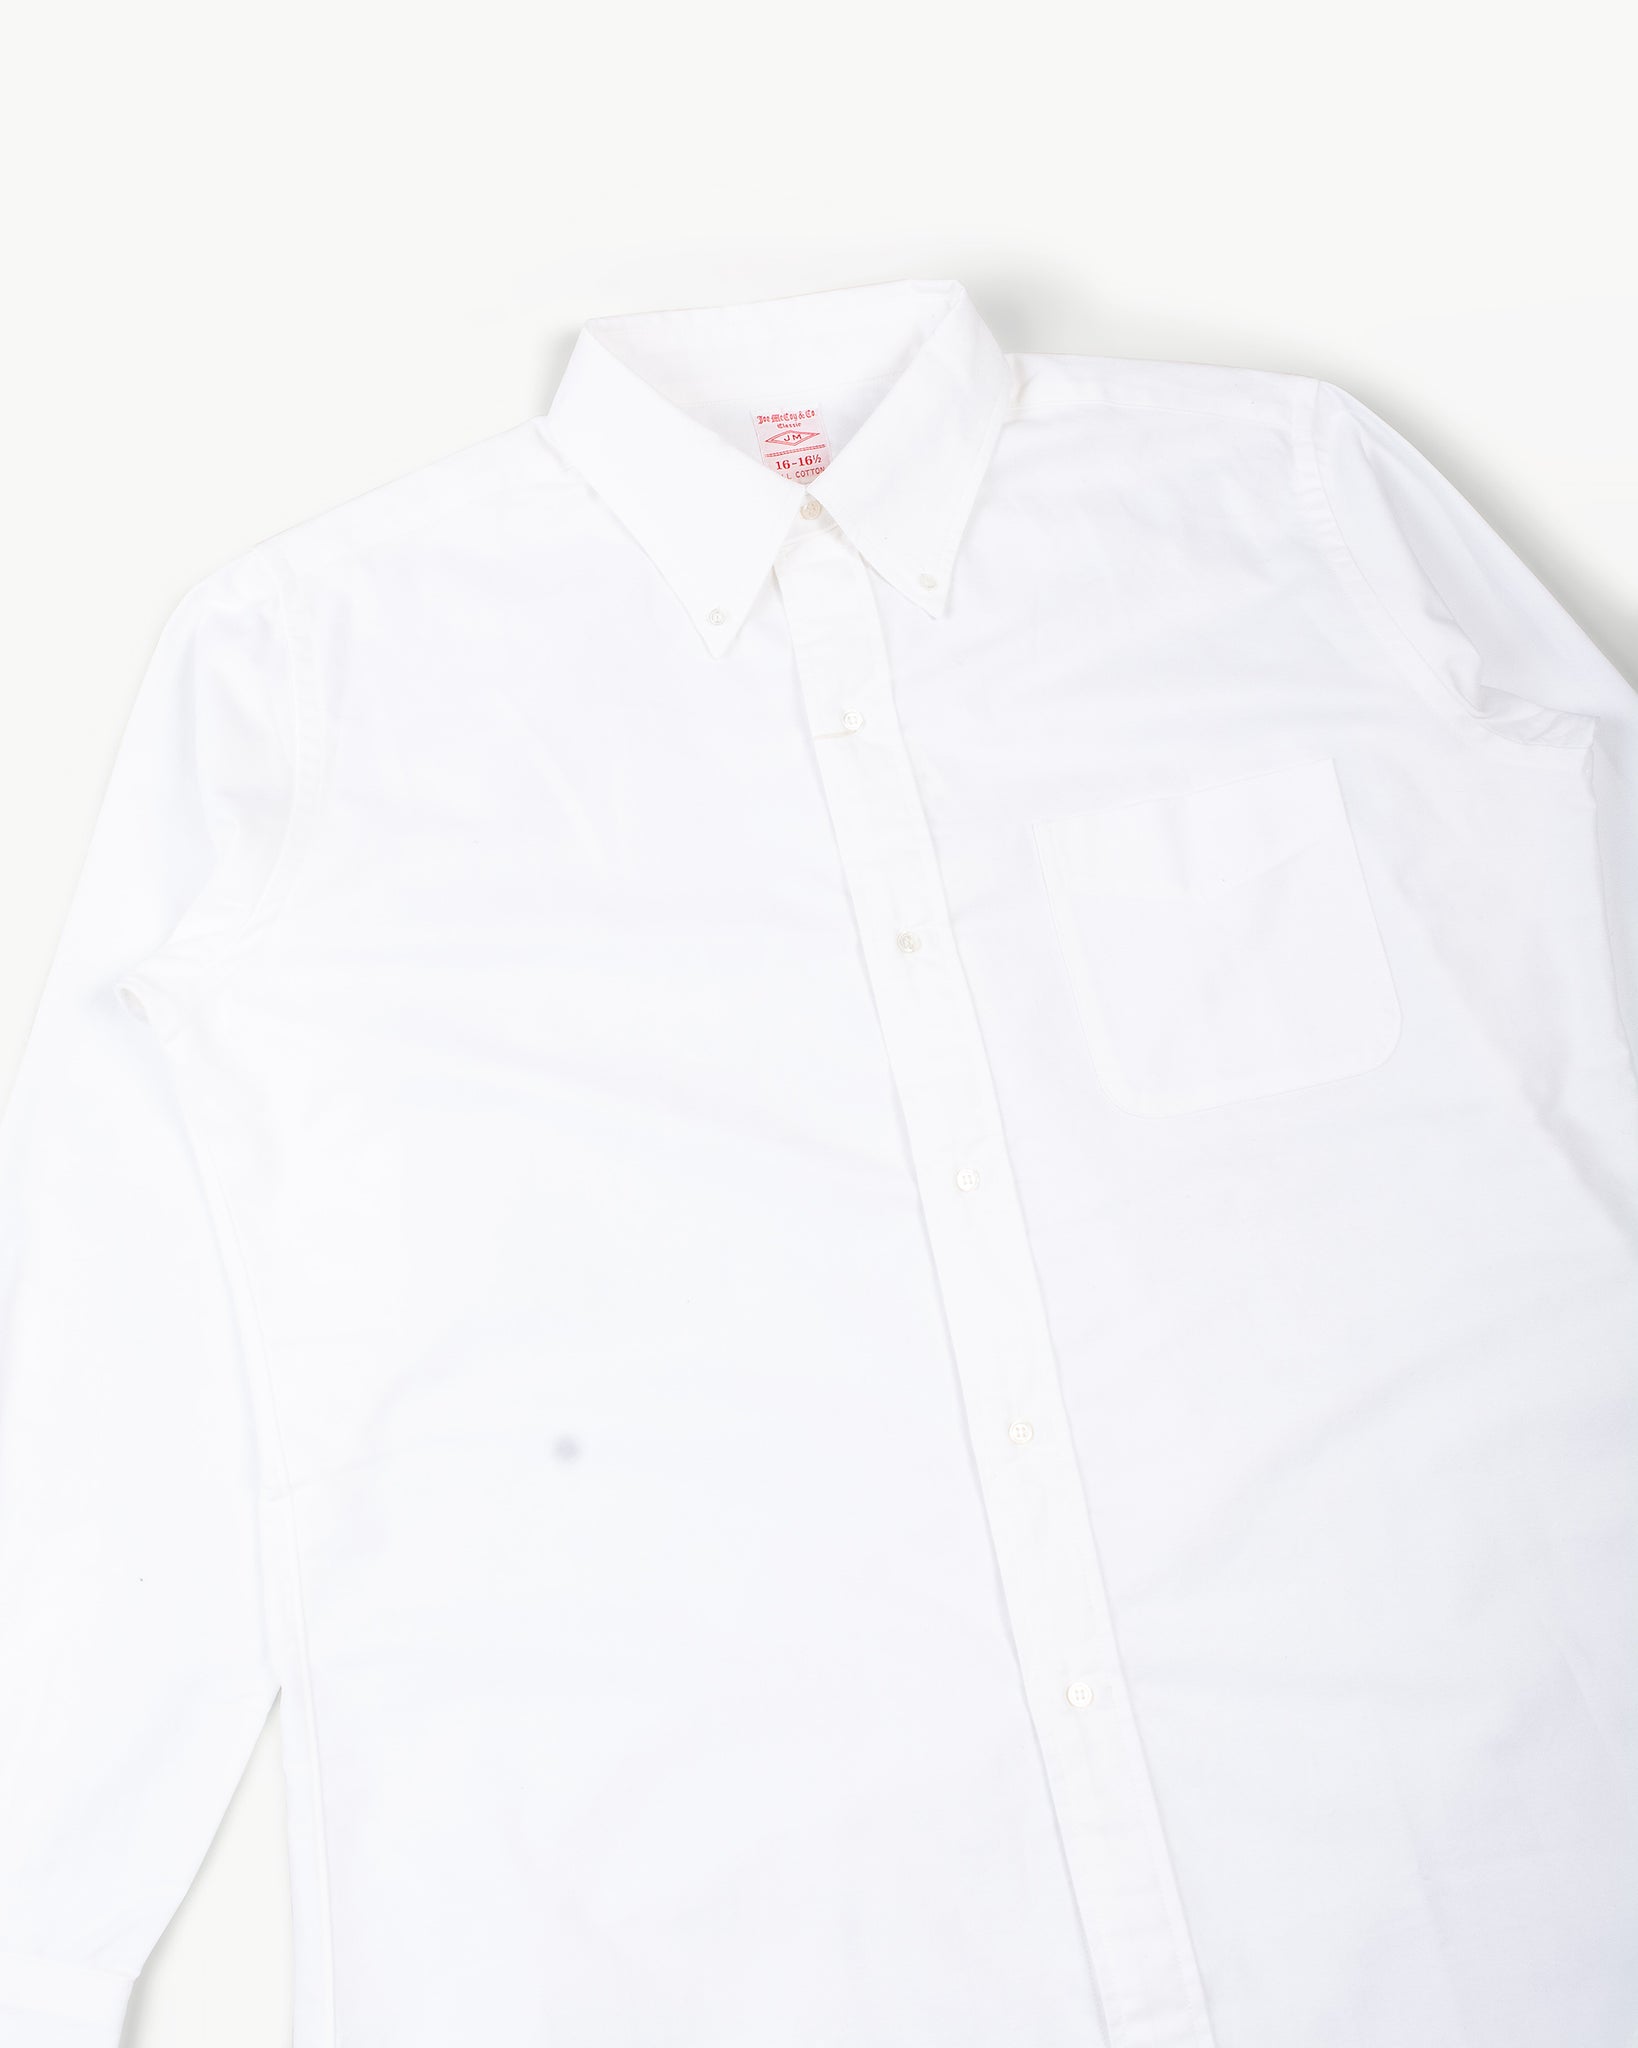 The Real McCoy's MS22008 Joe McCoy Button Down Shirt White Details